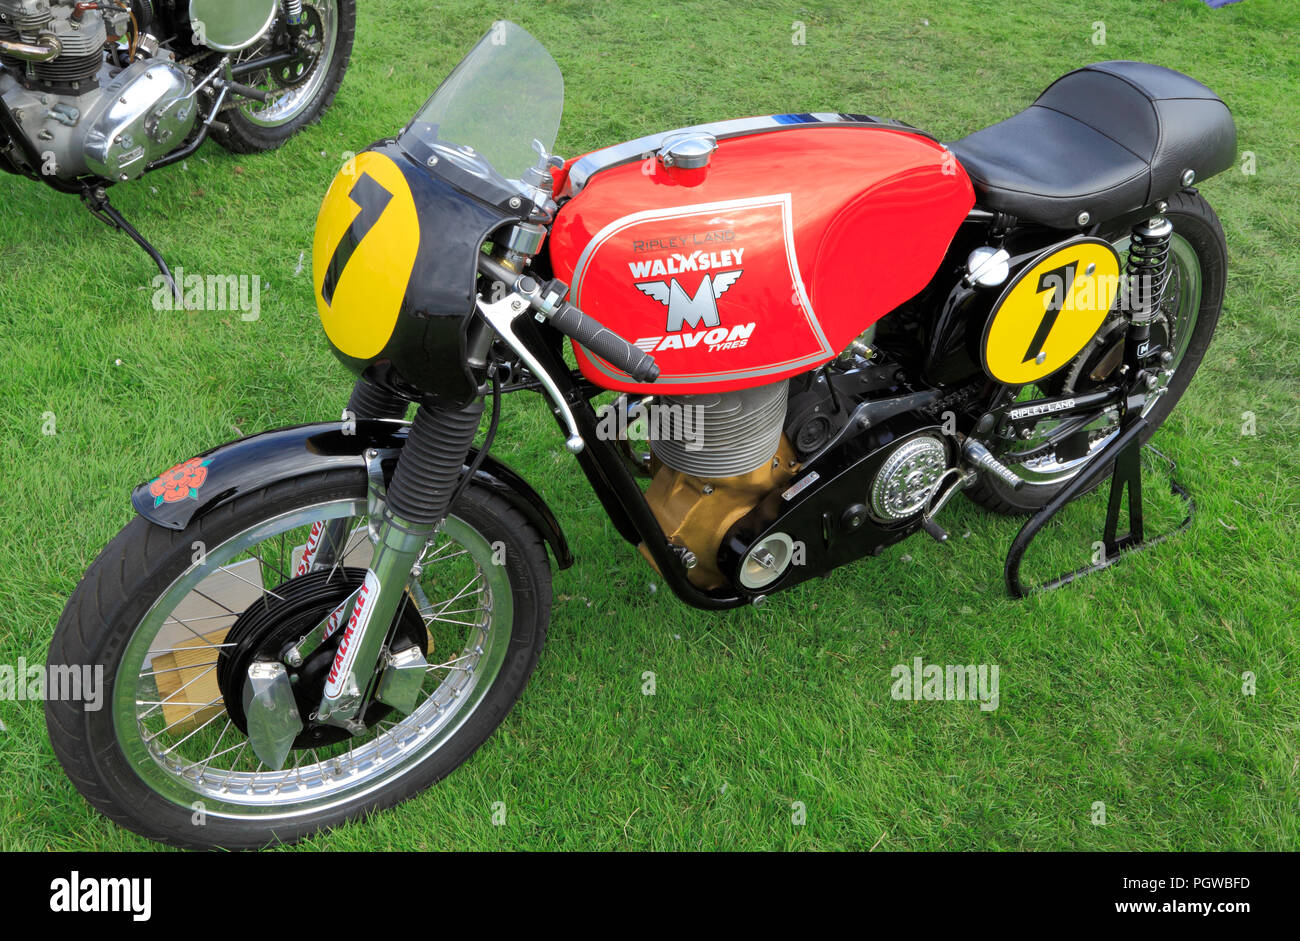 Ripley Land, Walmsley motorcycle, Avon Tyres, motorbike, logo Stock Photo